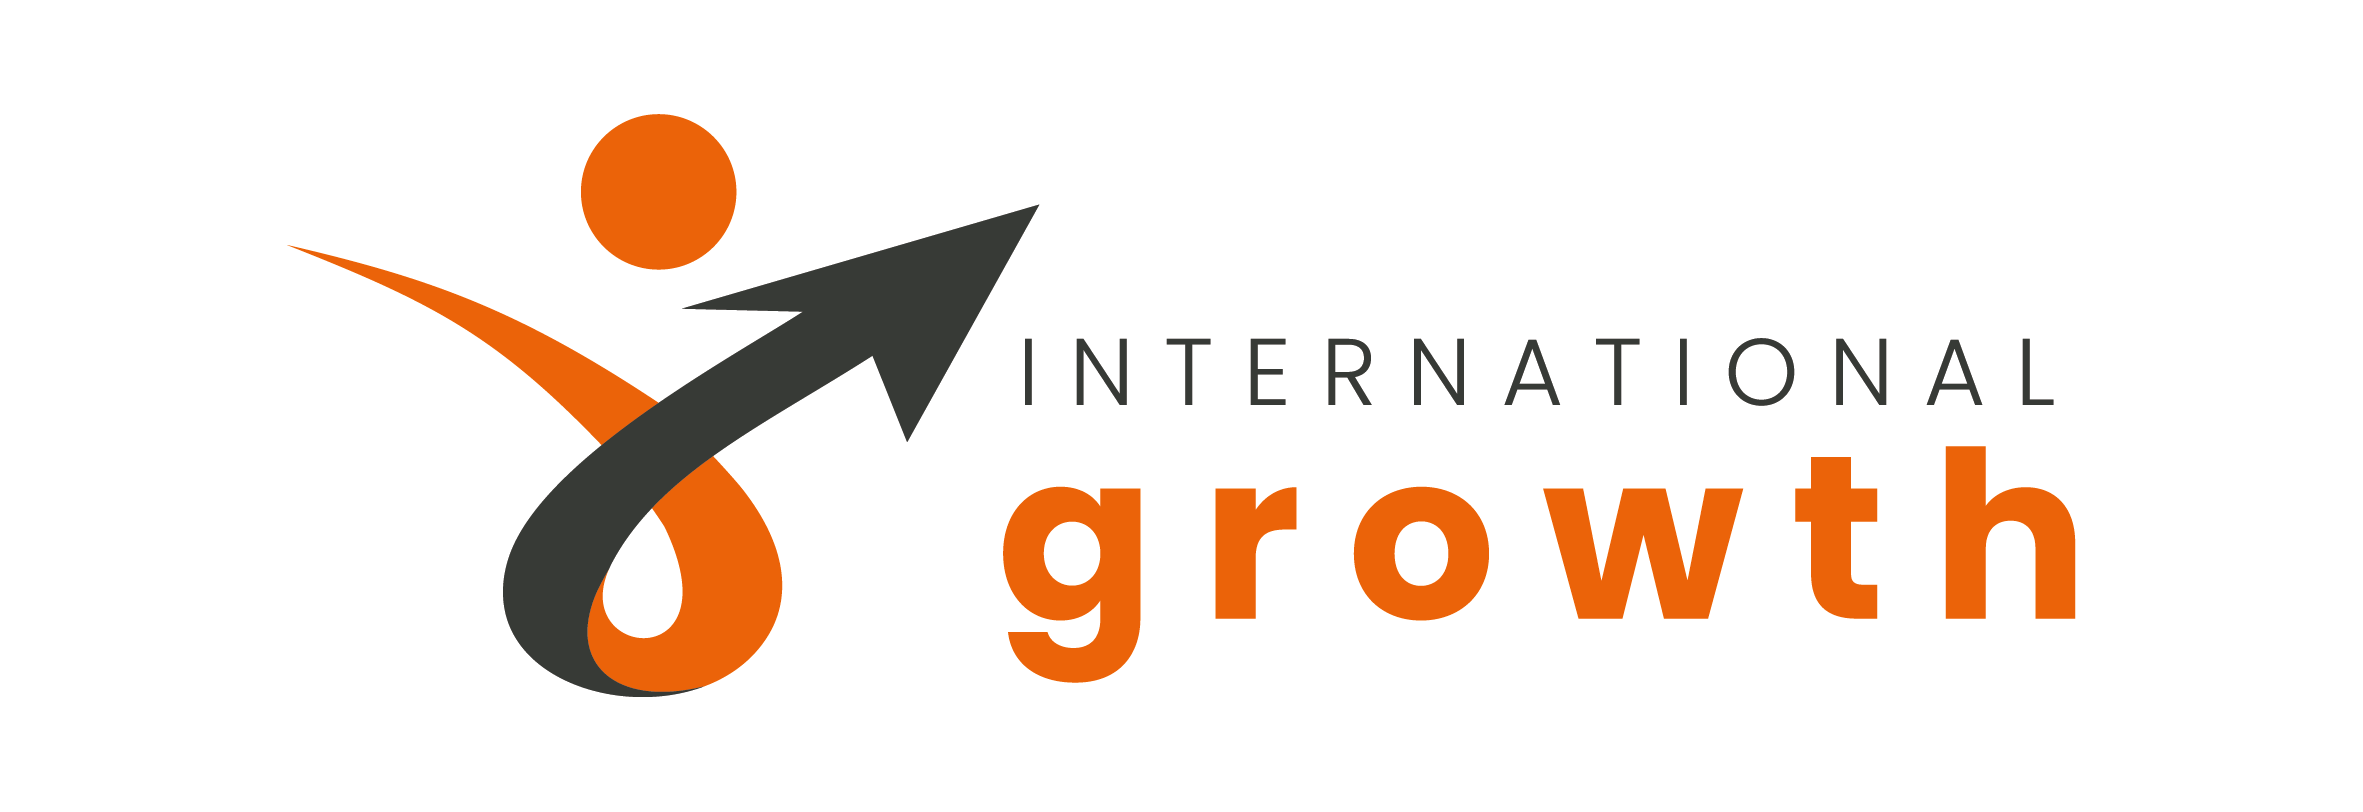 International Growth